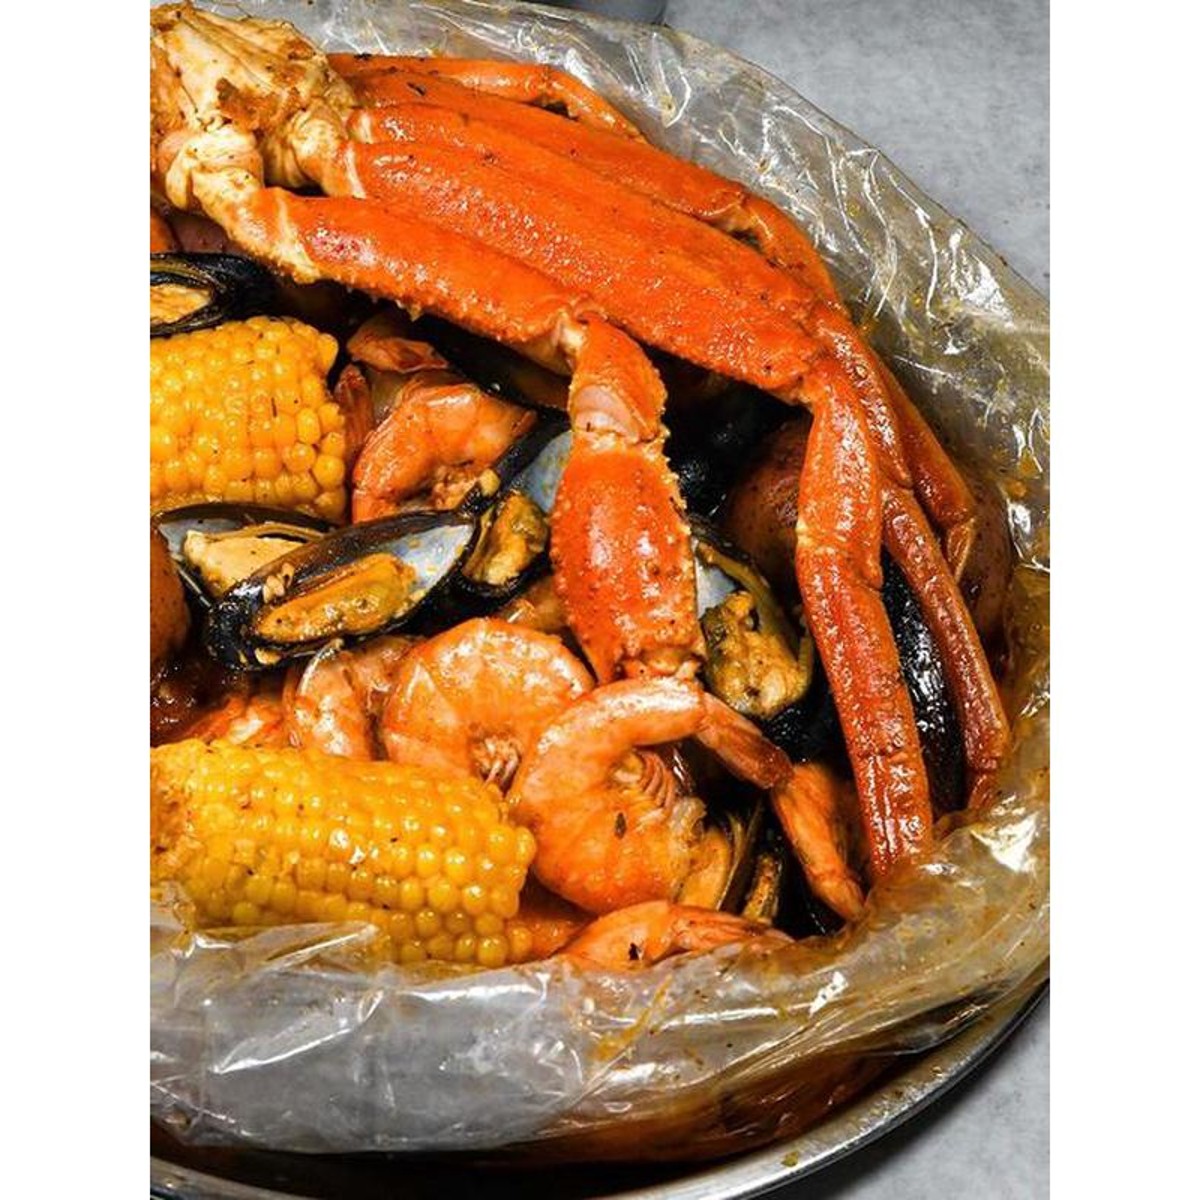 Hook & Reel Cajun Seafood & Bar USA - Is a half pound of seafood